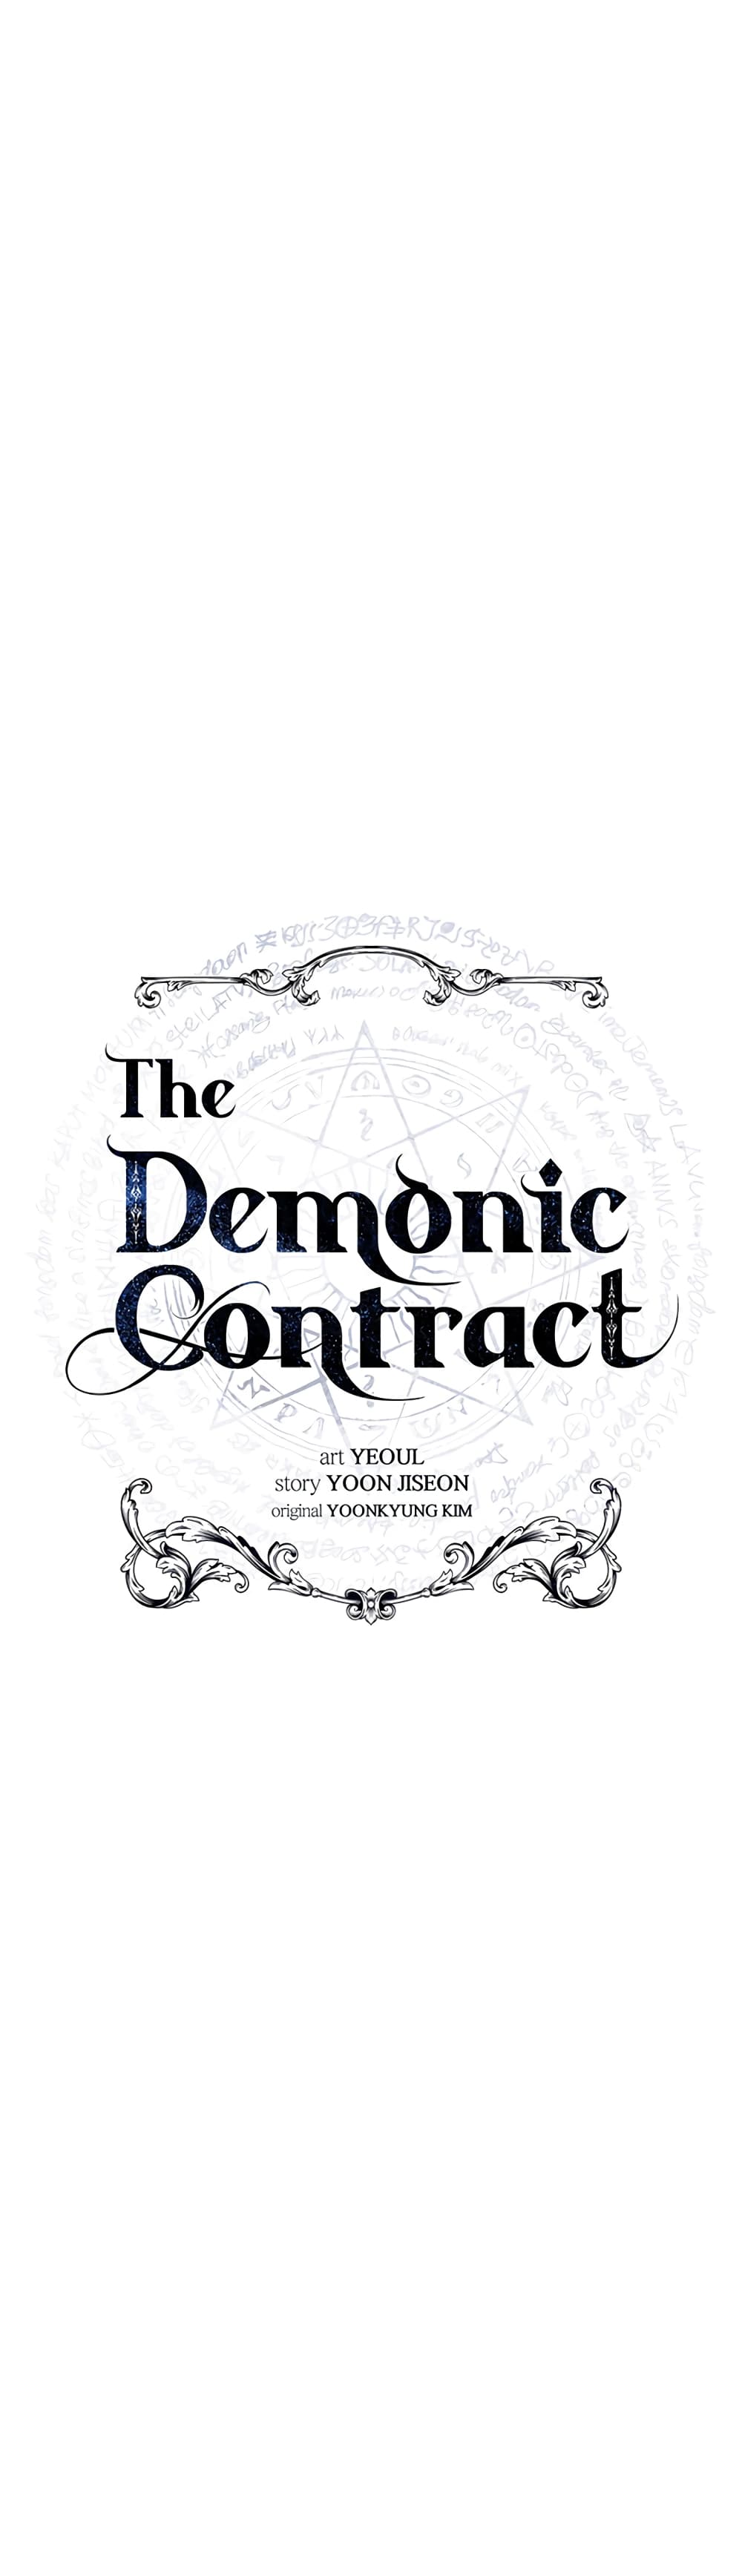 The Demonic Contract 39 10